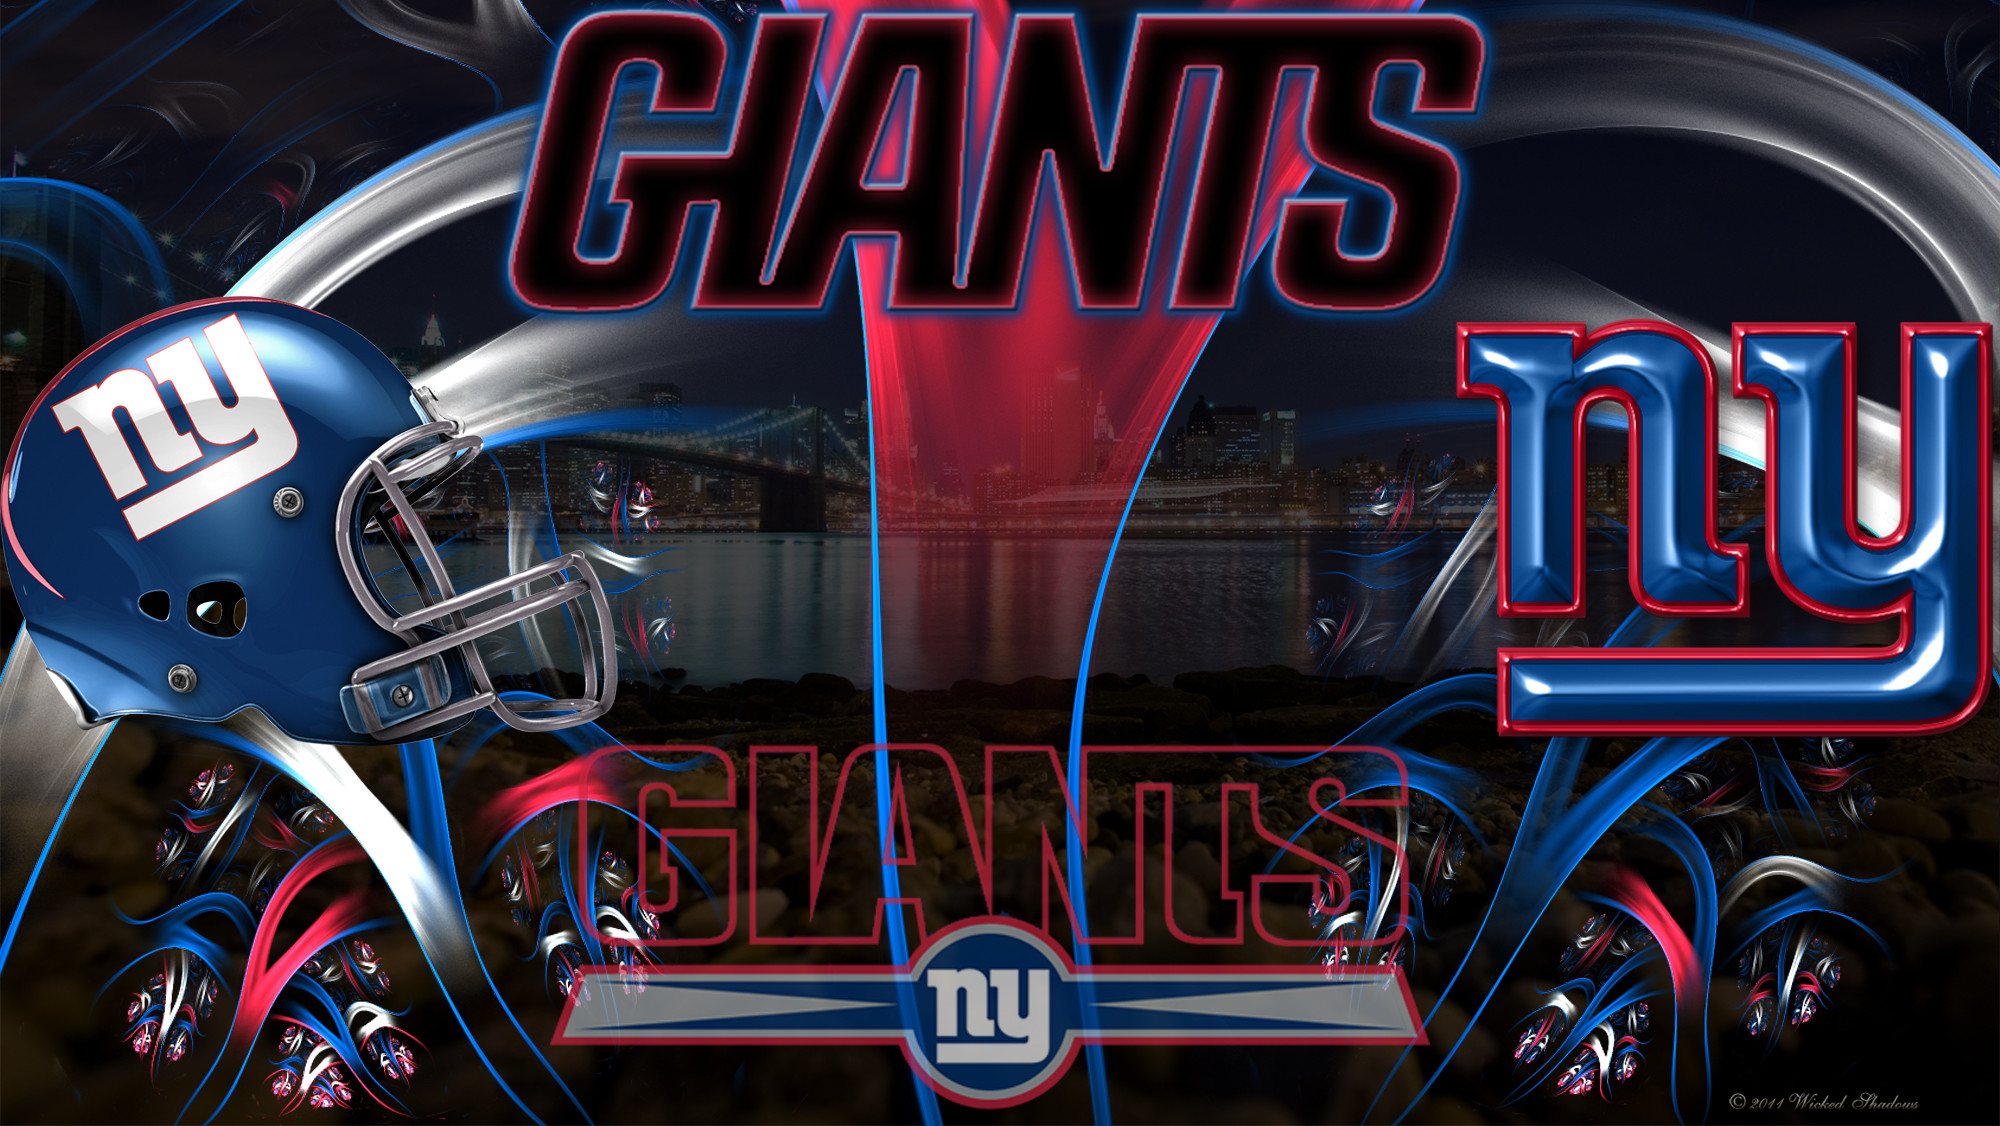 2000x1126 New York Giants wallpaper 54123